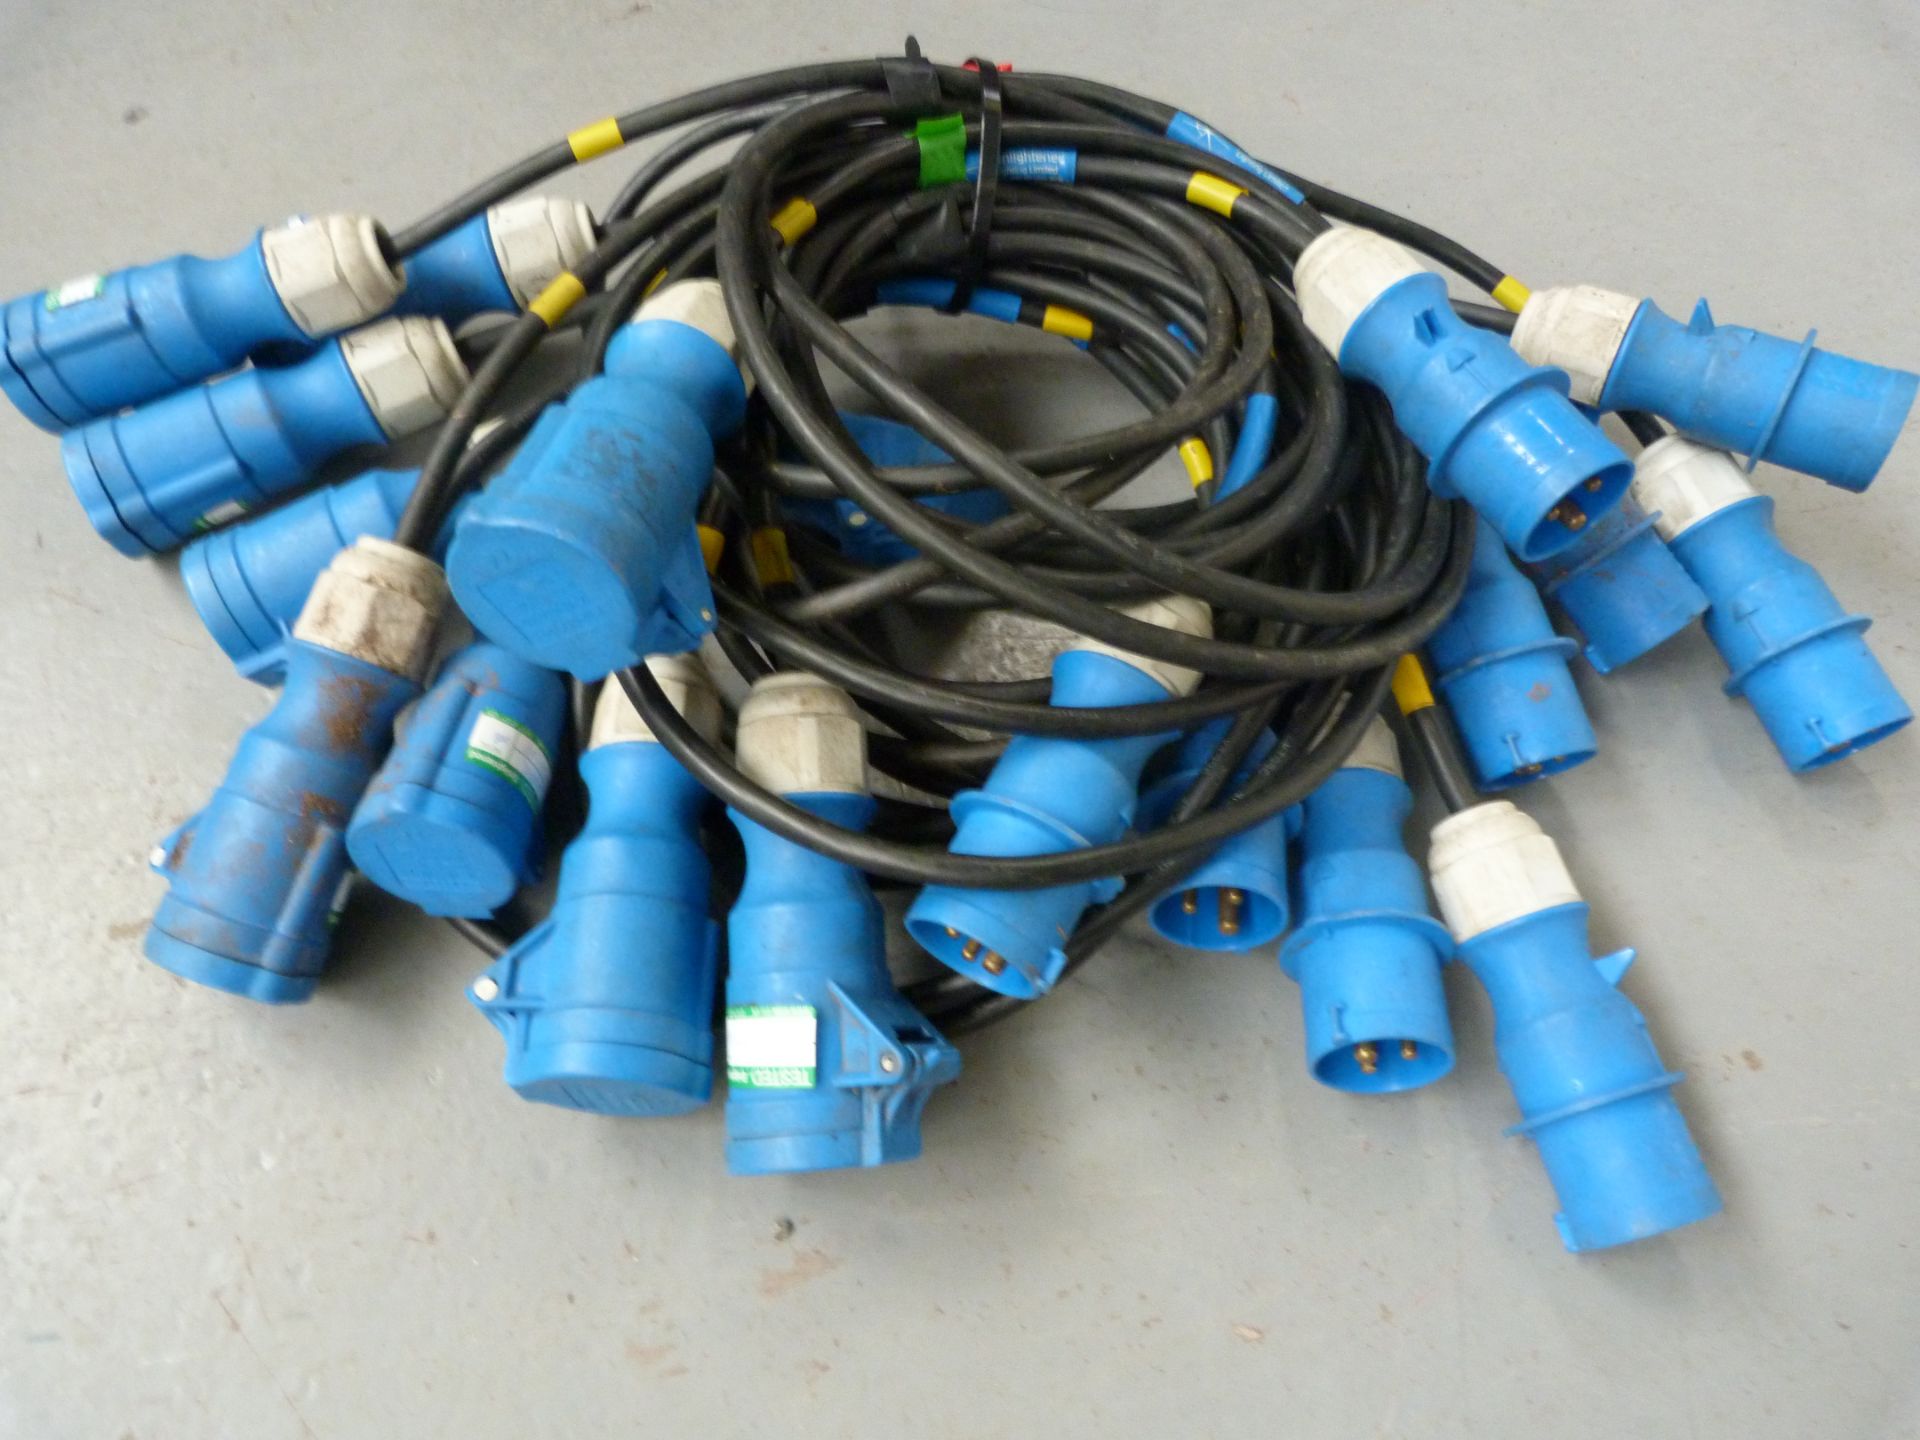 10x 2m 16A Cable HO7 - 1.5mm Blue Connectors. Ex-hire/Fair Condition. Photo Representative